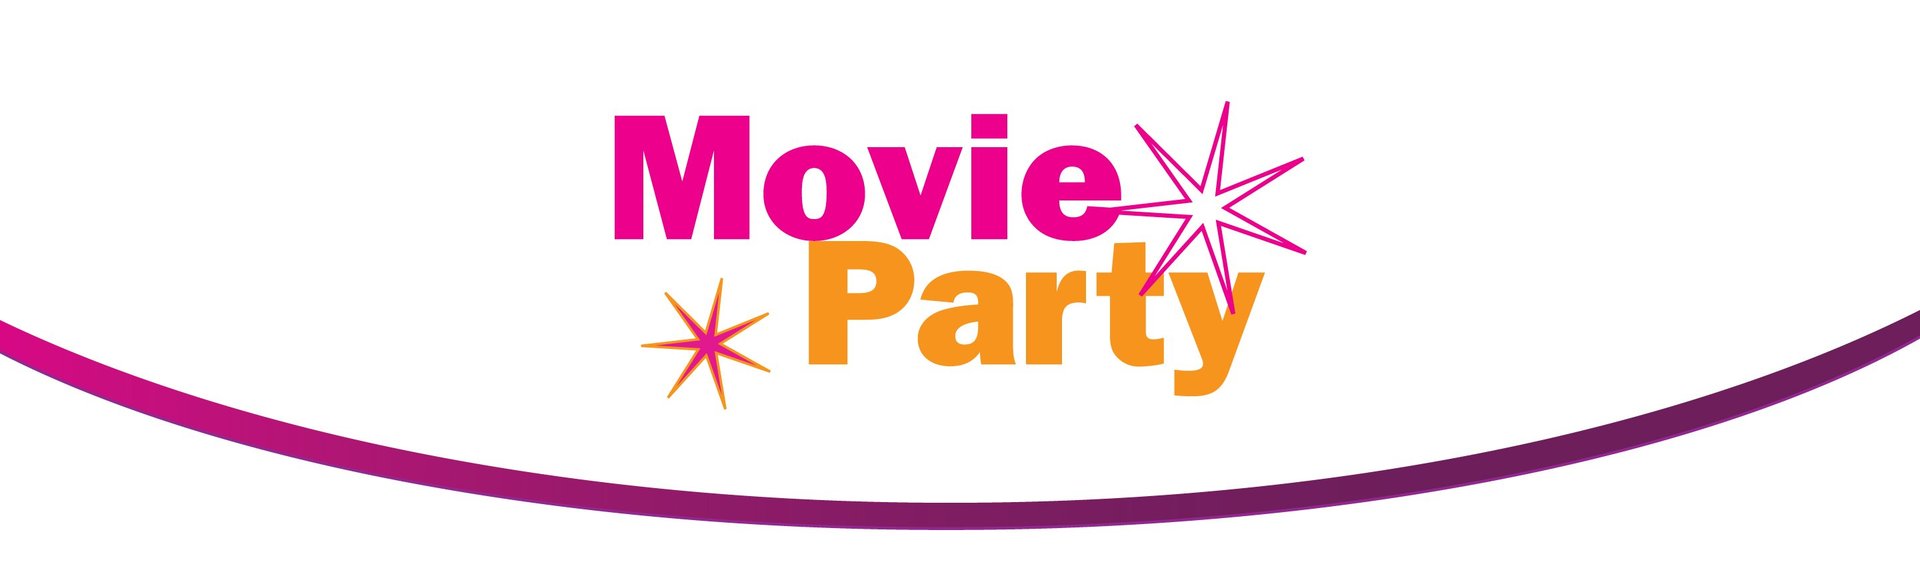 Movie party